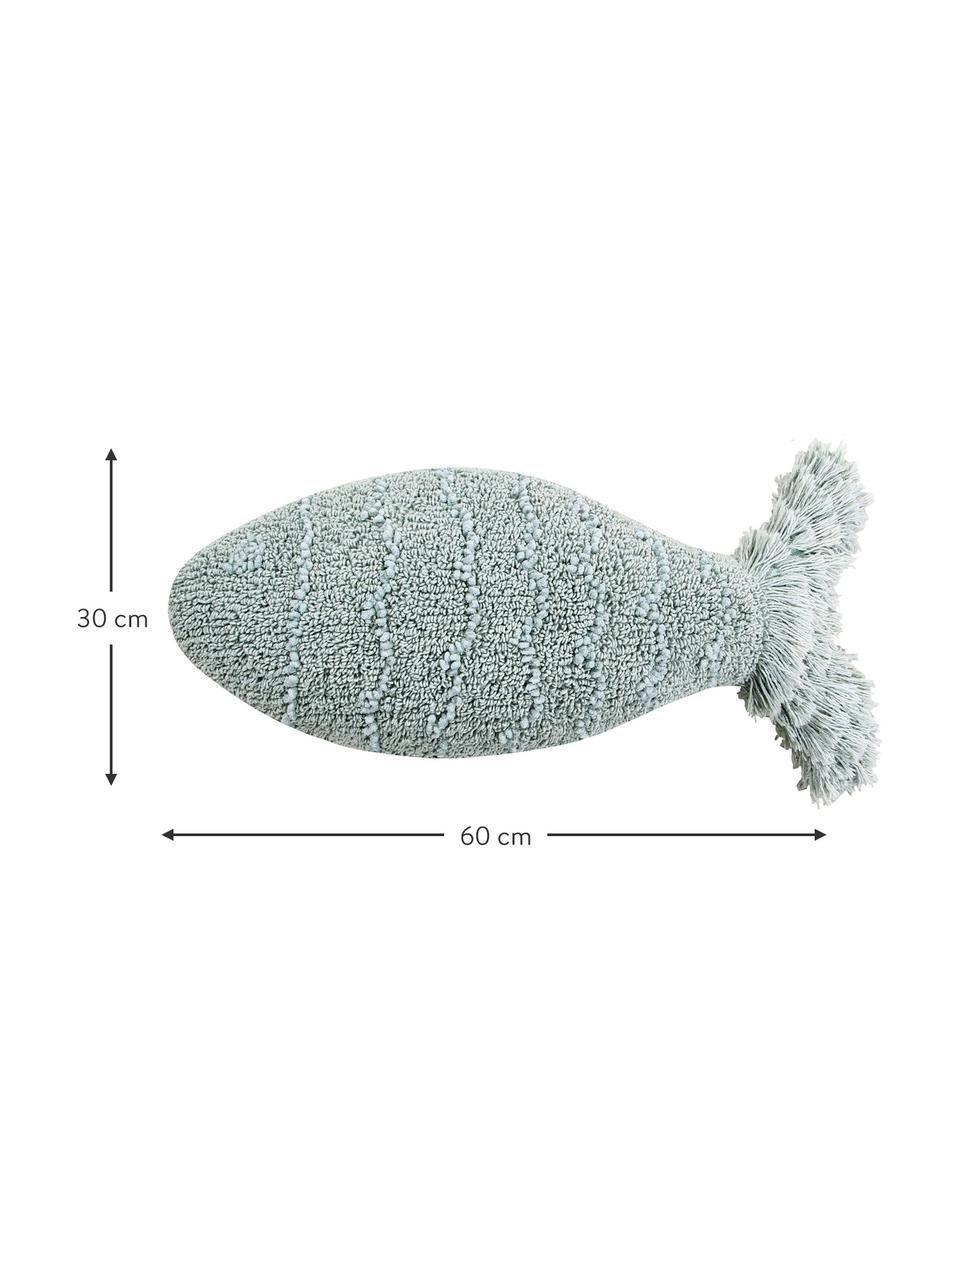 Kissen Baby Fish, mit Inlett, Bezug: 97% Baumwolle, 3% recycel, Blau, B 30 x L 60 cm